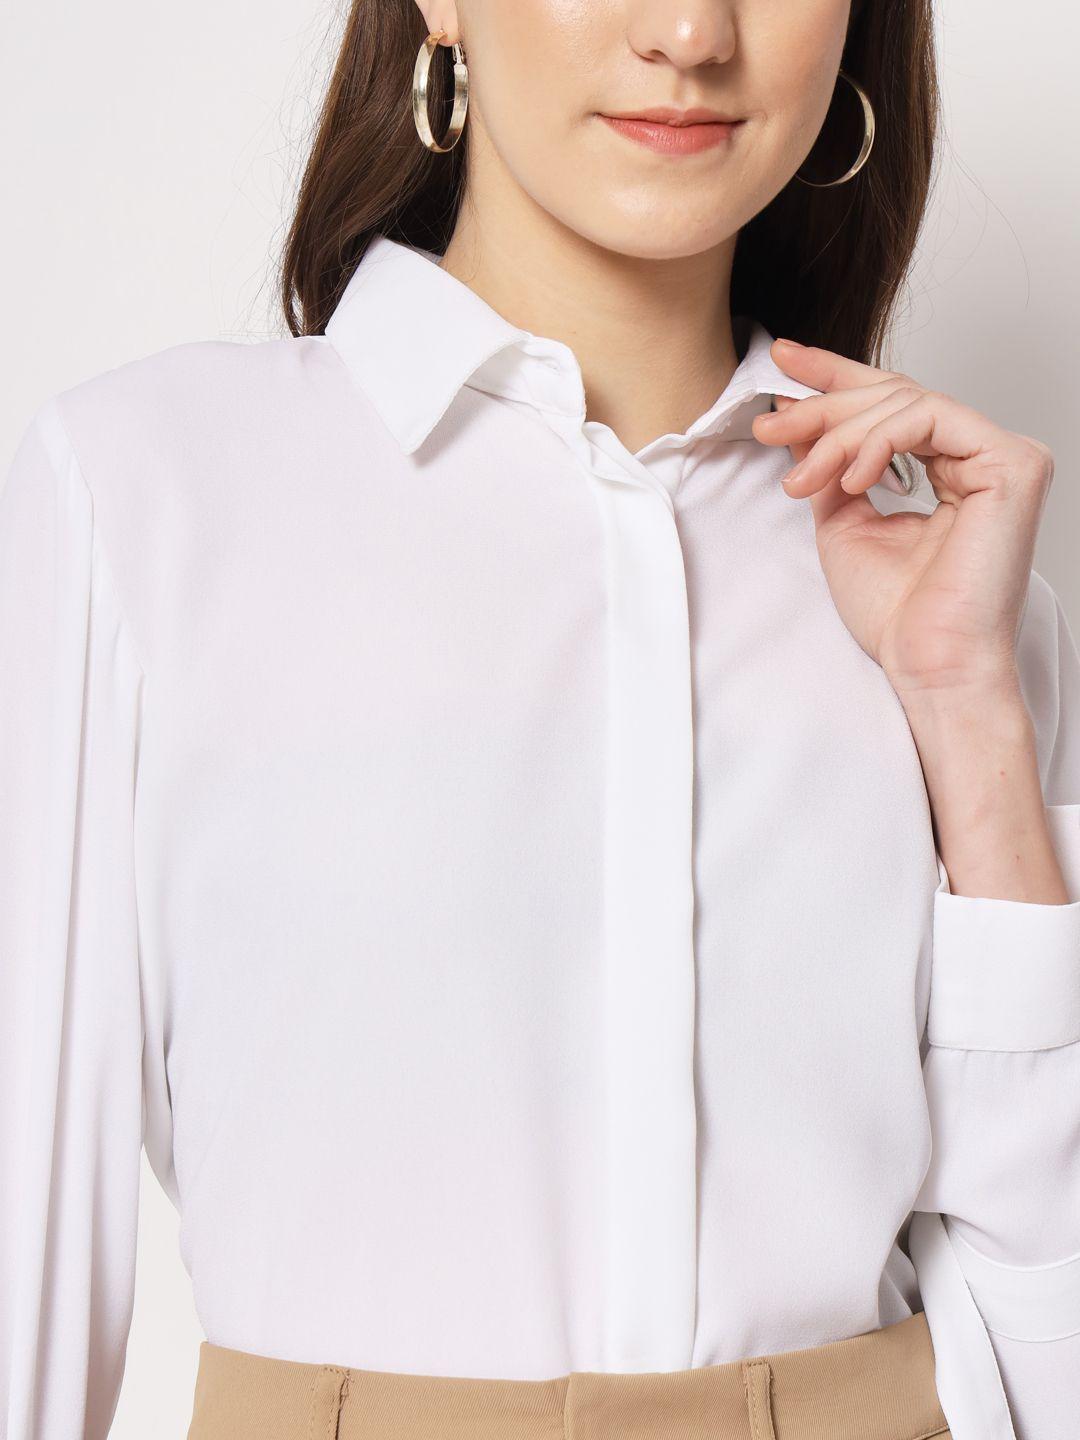 TRENDARREST Women's White Shirt with Buckle Detail Sleeve